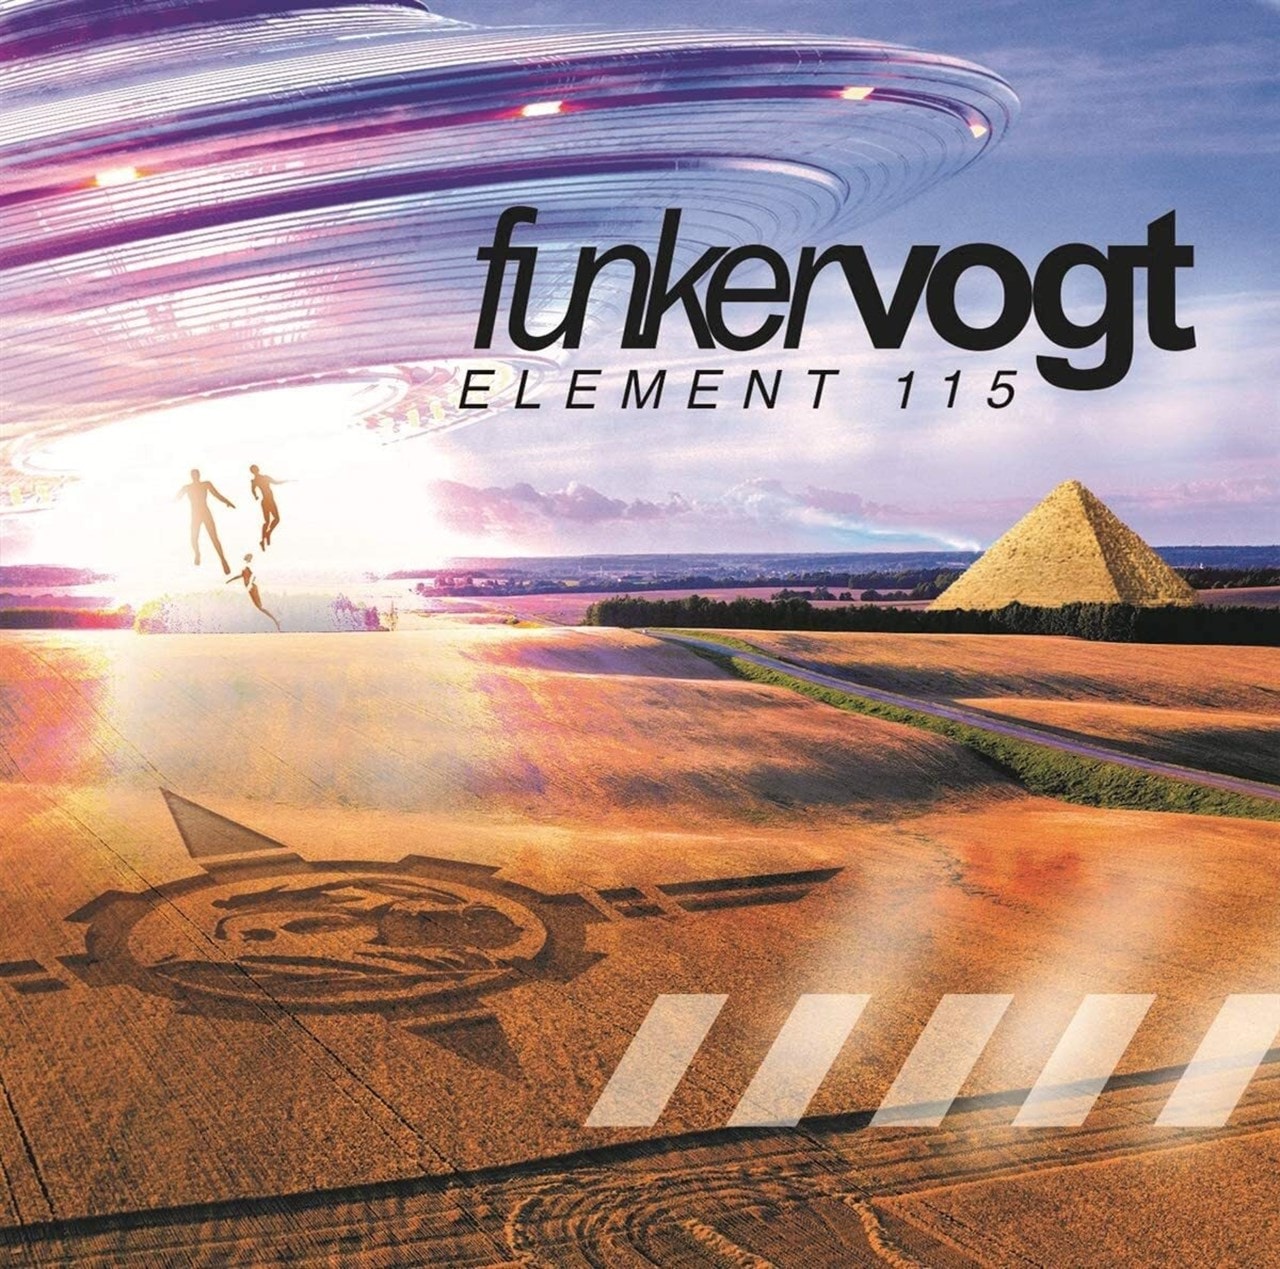 Element 115 | CD Album | Free shipping over £20 | HMV Store
